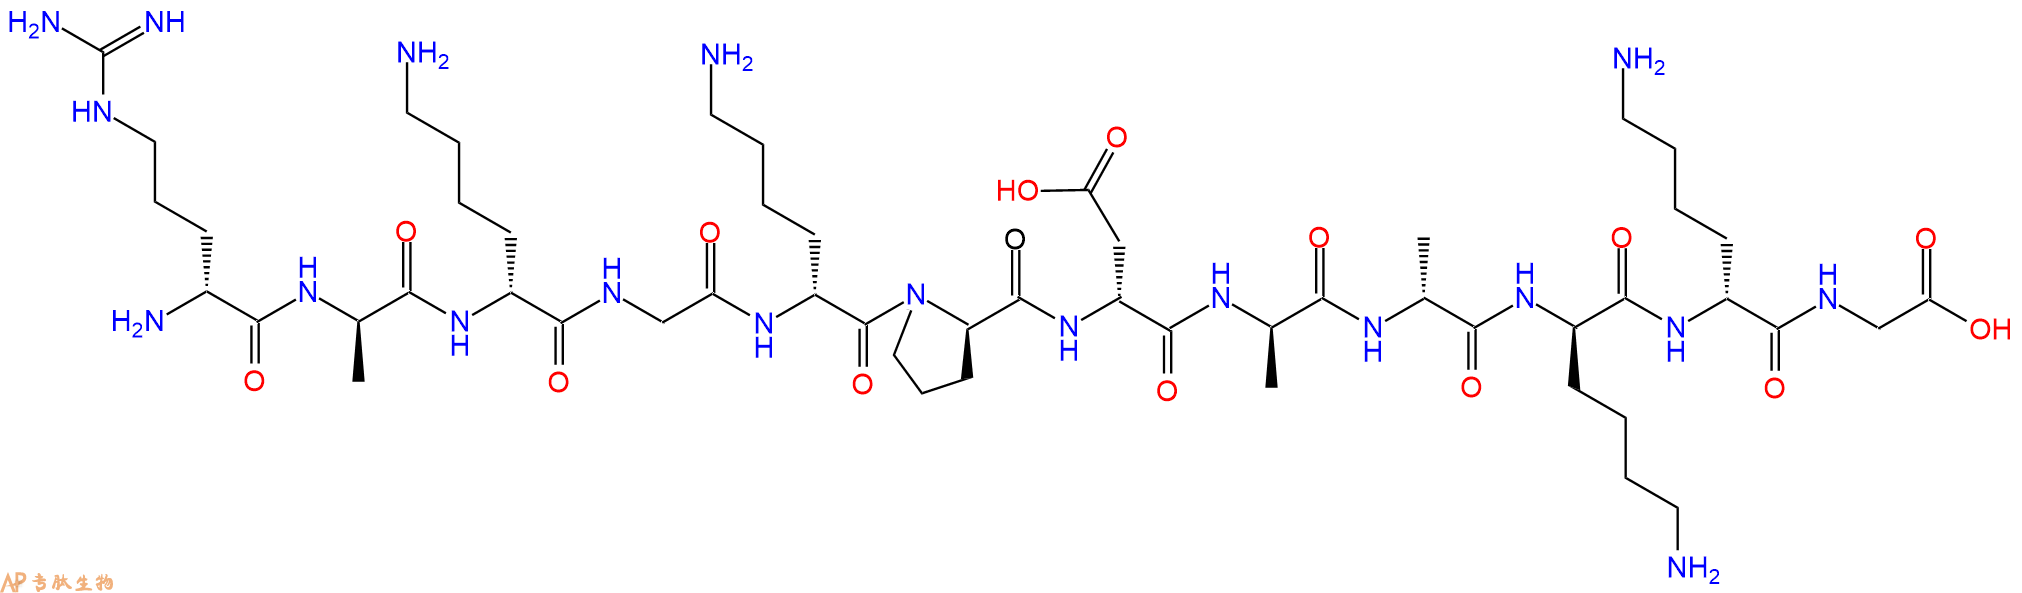 专肽生物产品H2N-DArg-DAla-DLys-Gly-DLys-DPro-DAsp-DAla-DAla-DL